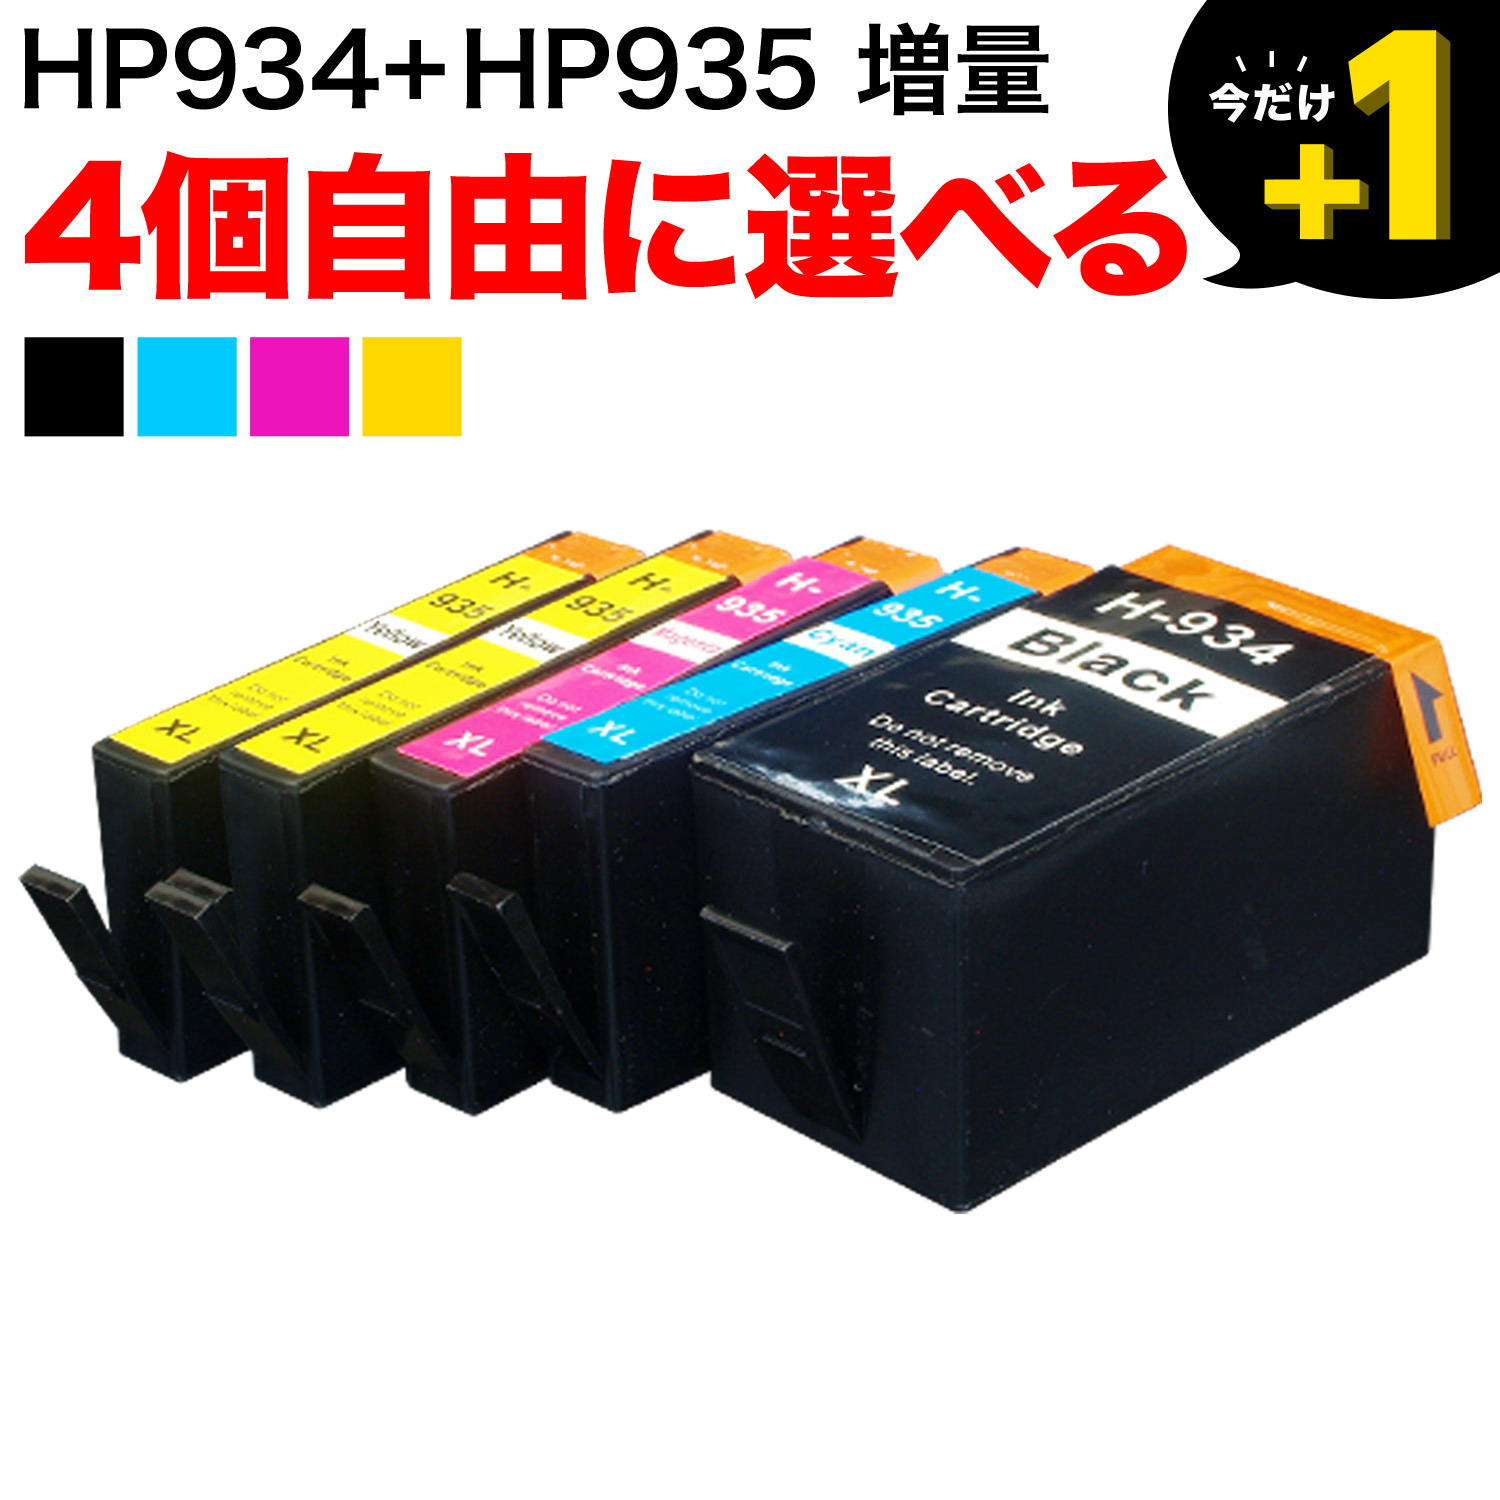 HP934・HP935 HP用 互換インクカートリッジ 増量 自由選択4個セット